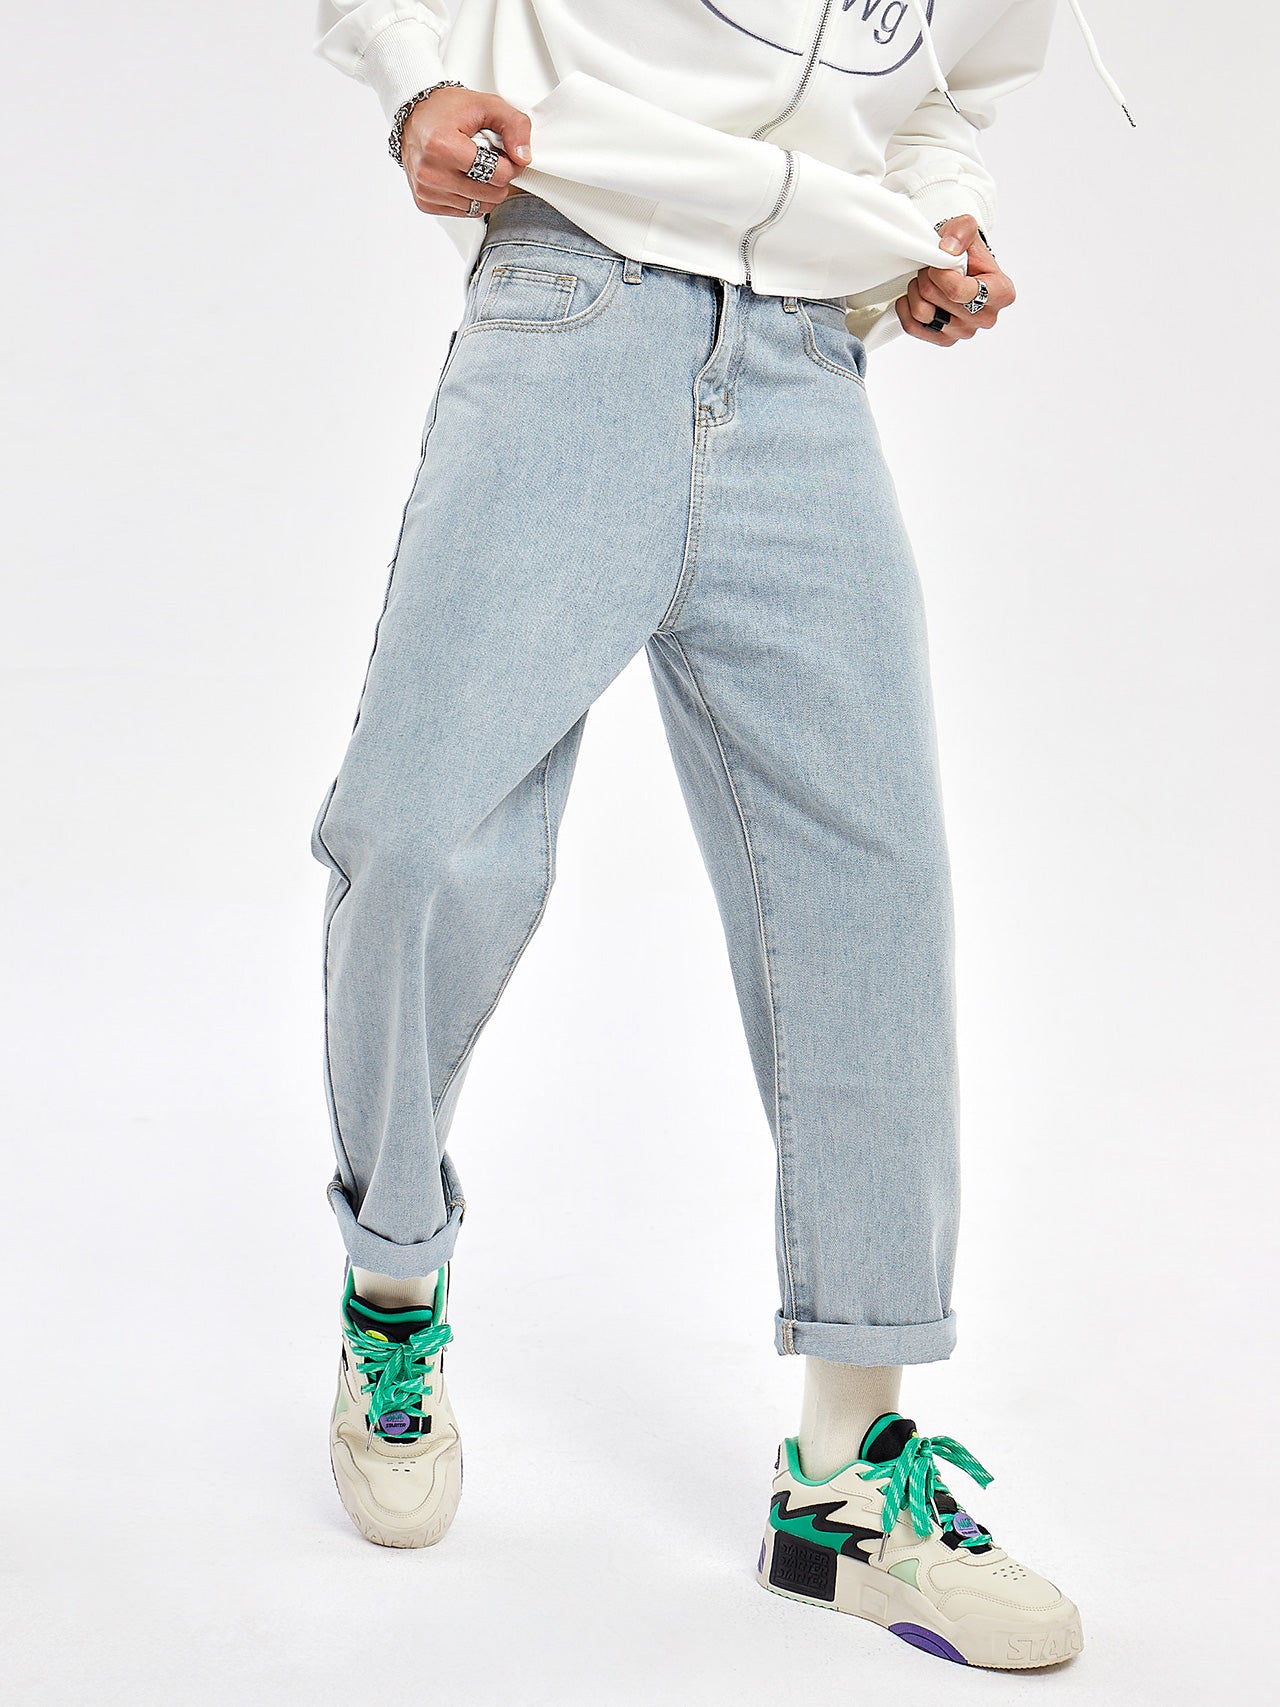 JUSTNOTAG Casual Street HipHop Print LightBlue Long Loose Jeans